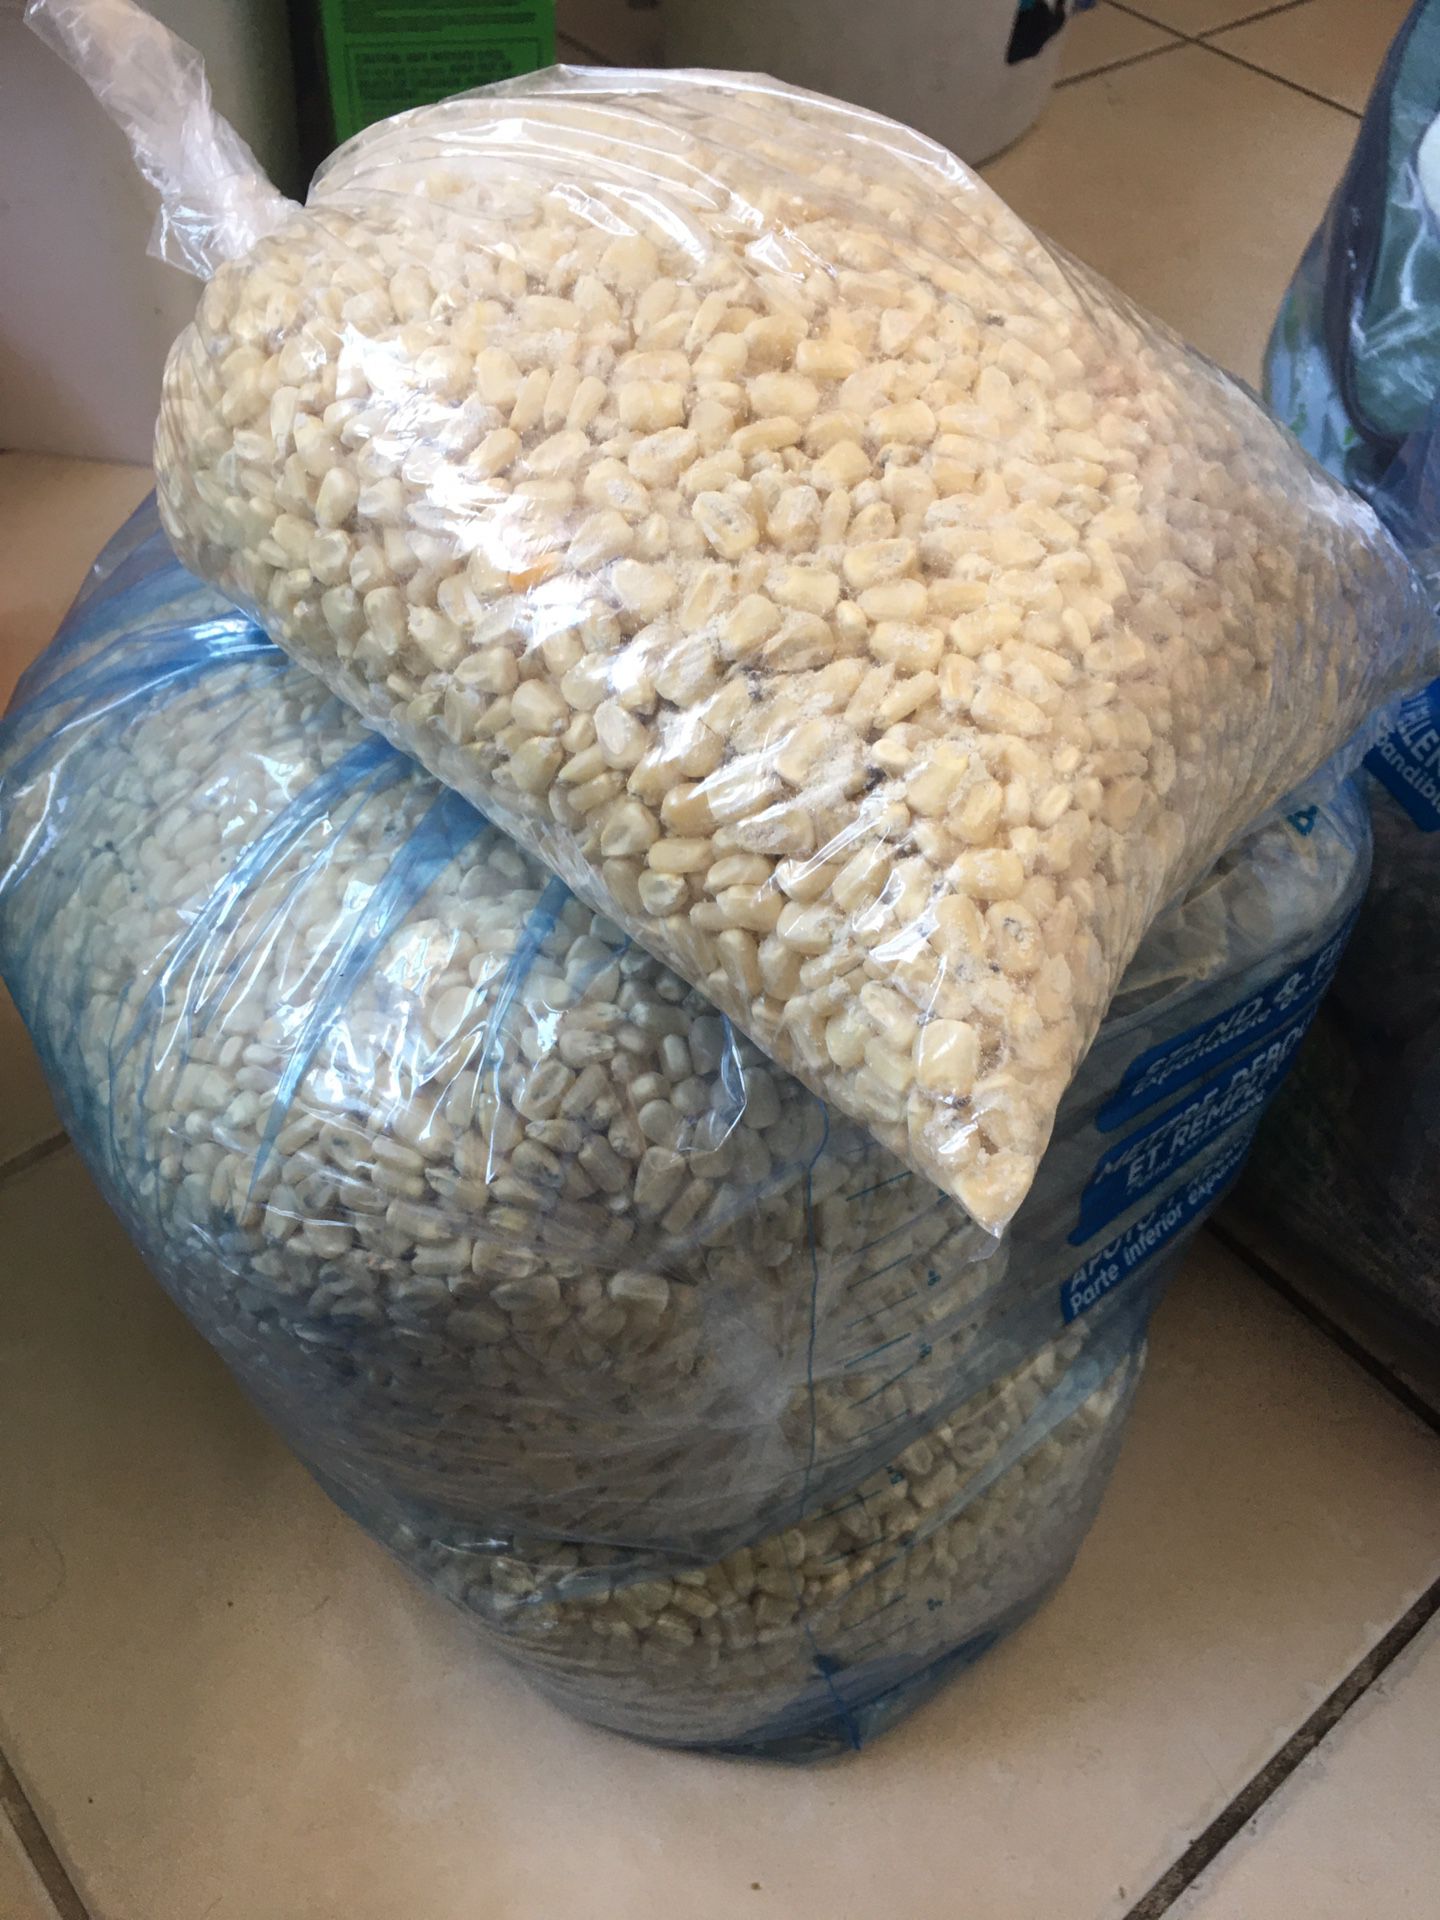 Corn grains for animals